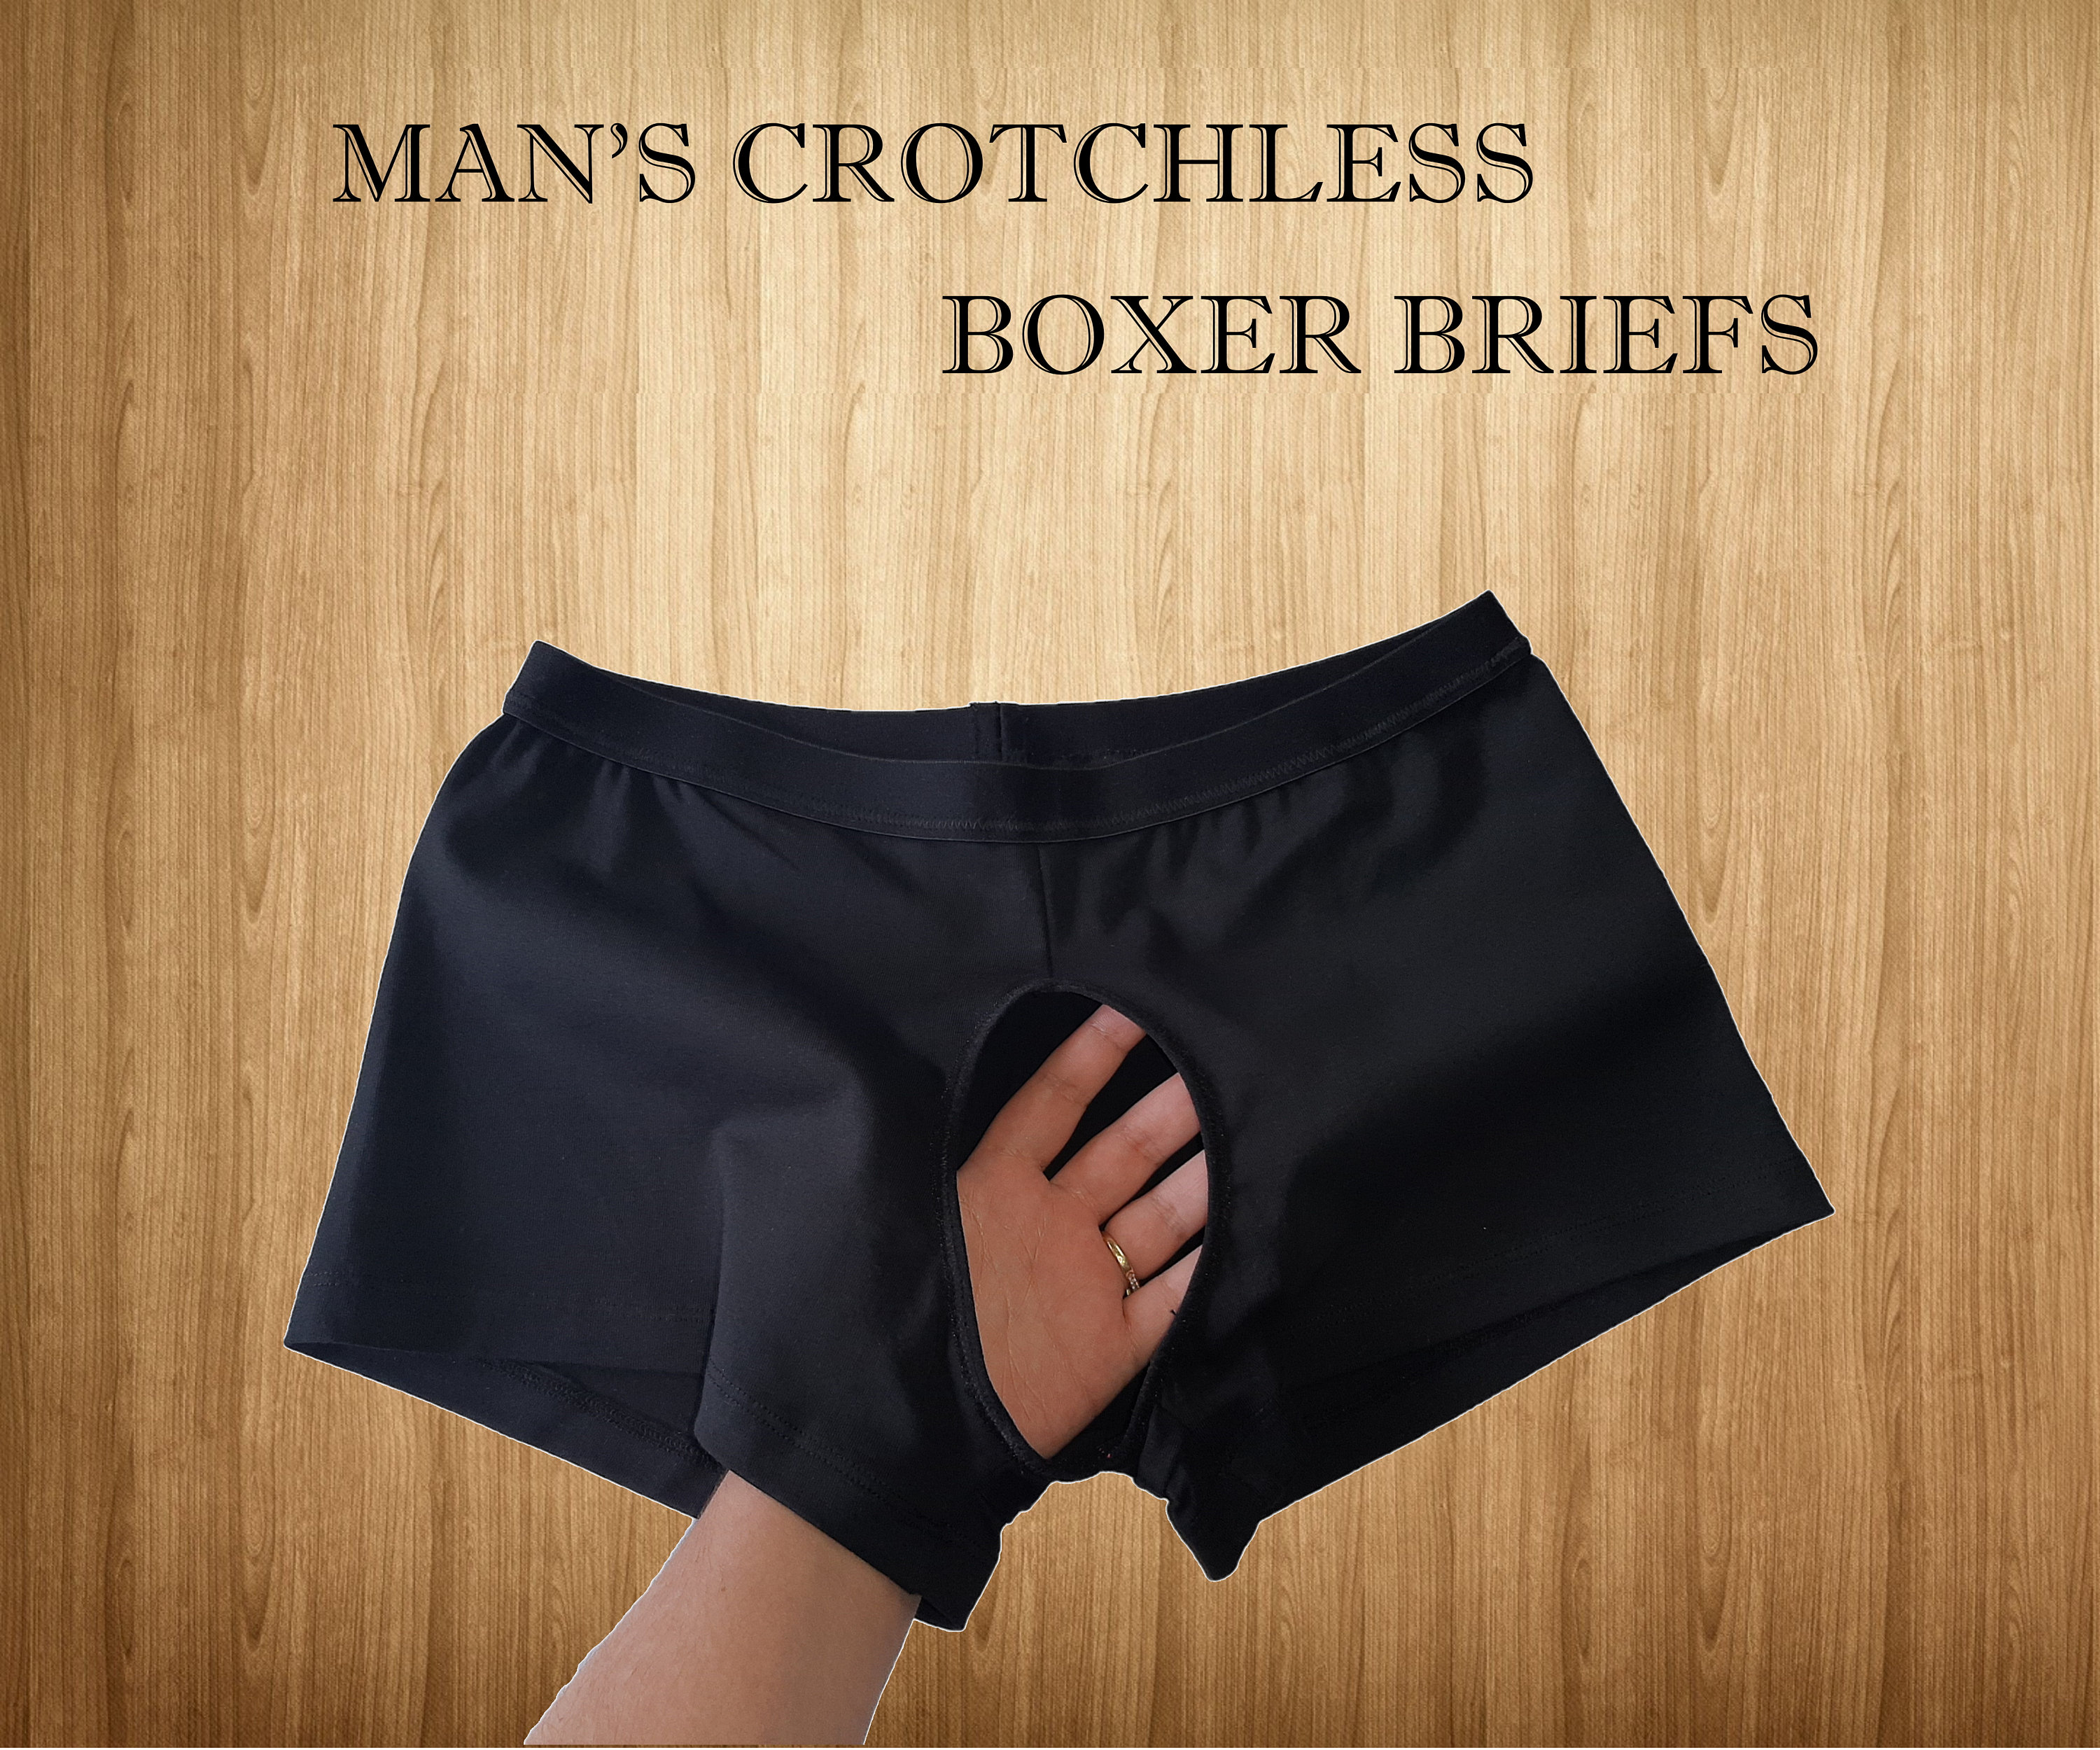 Tomboy Boxers, Plus Size Lingerie, Olive Panties, Womens Boxers, Female  Boxers, Comfy Undies, Seductive Sleepwear, Lounge Shorts, FOXERS 